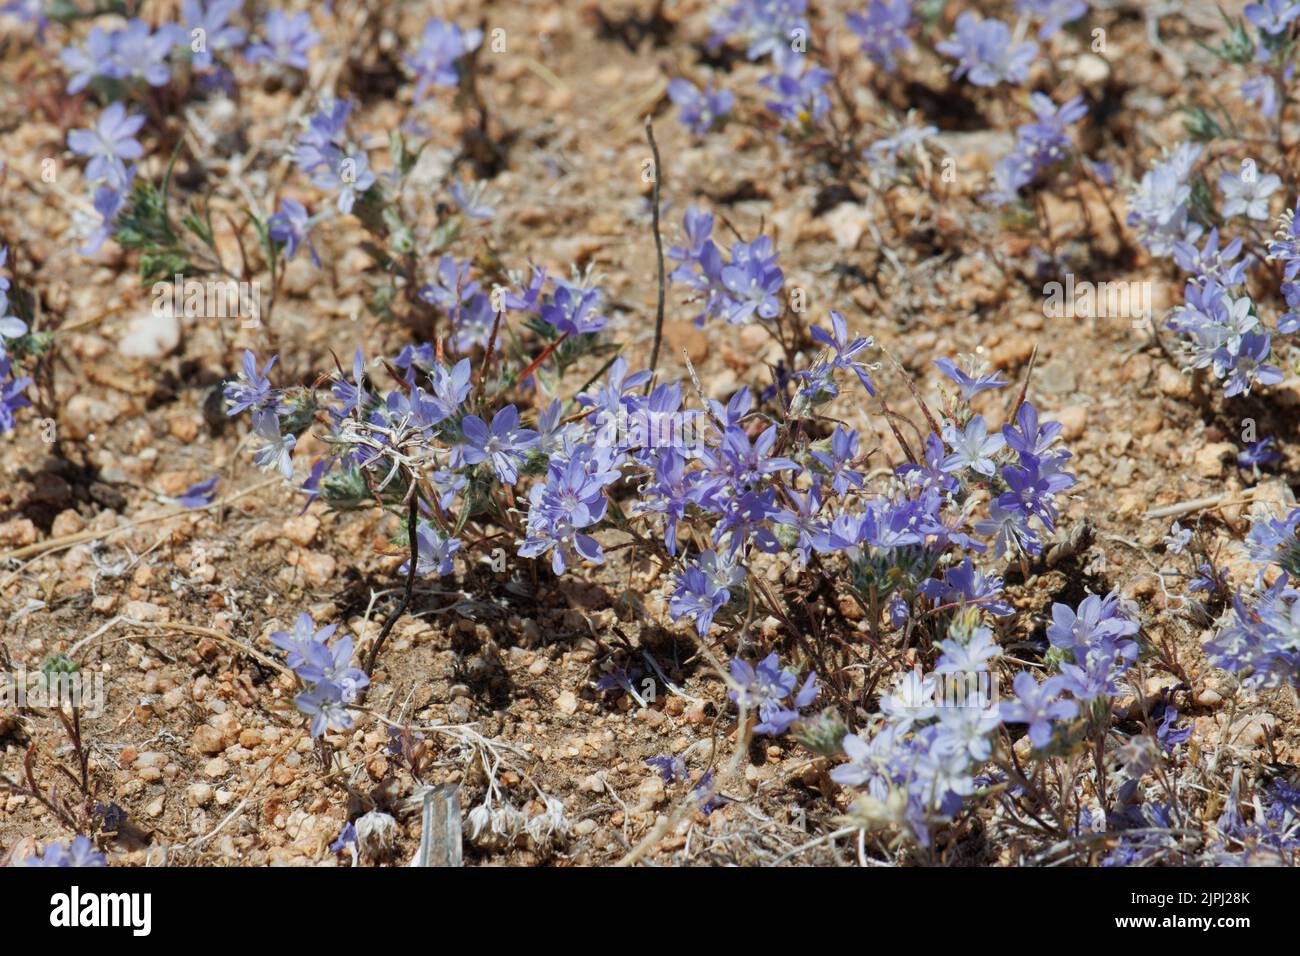 Blue flowering terminal cymose head inflorescences of Eriastrum Sapphirinum, Polemoniaceae, native annual in the Western Mojave Desert, Springtime. Stock Photo